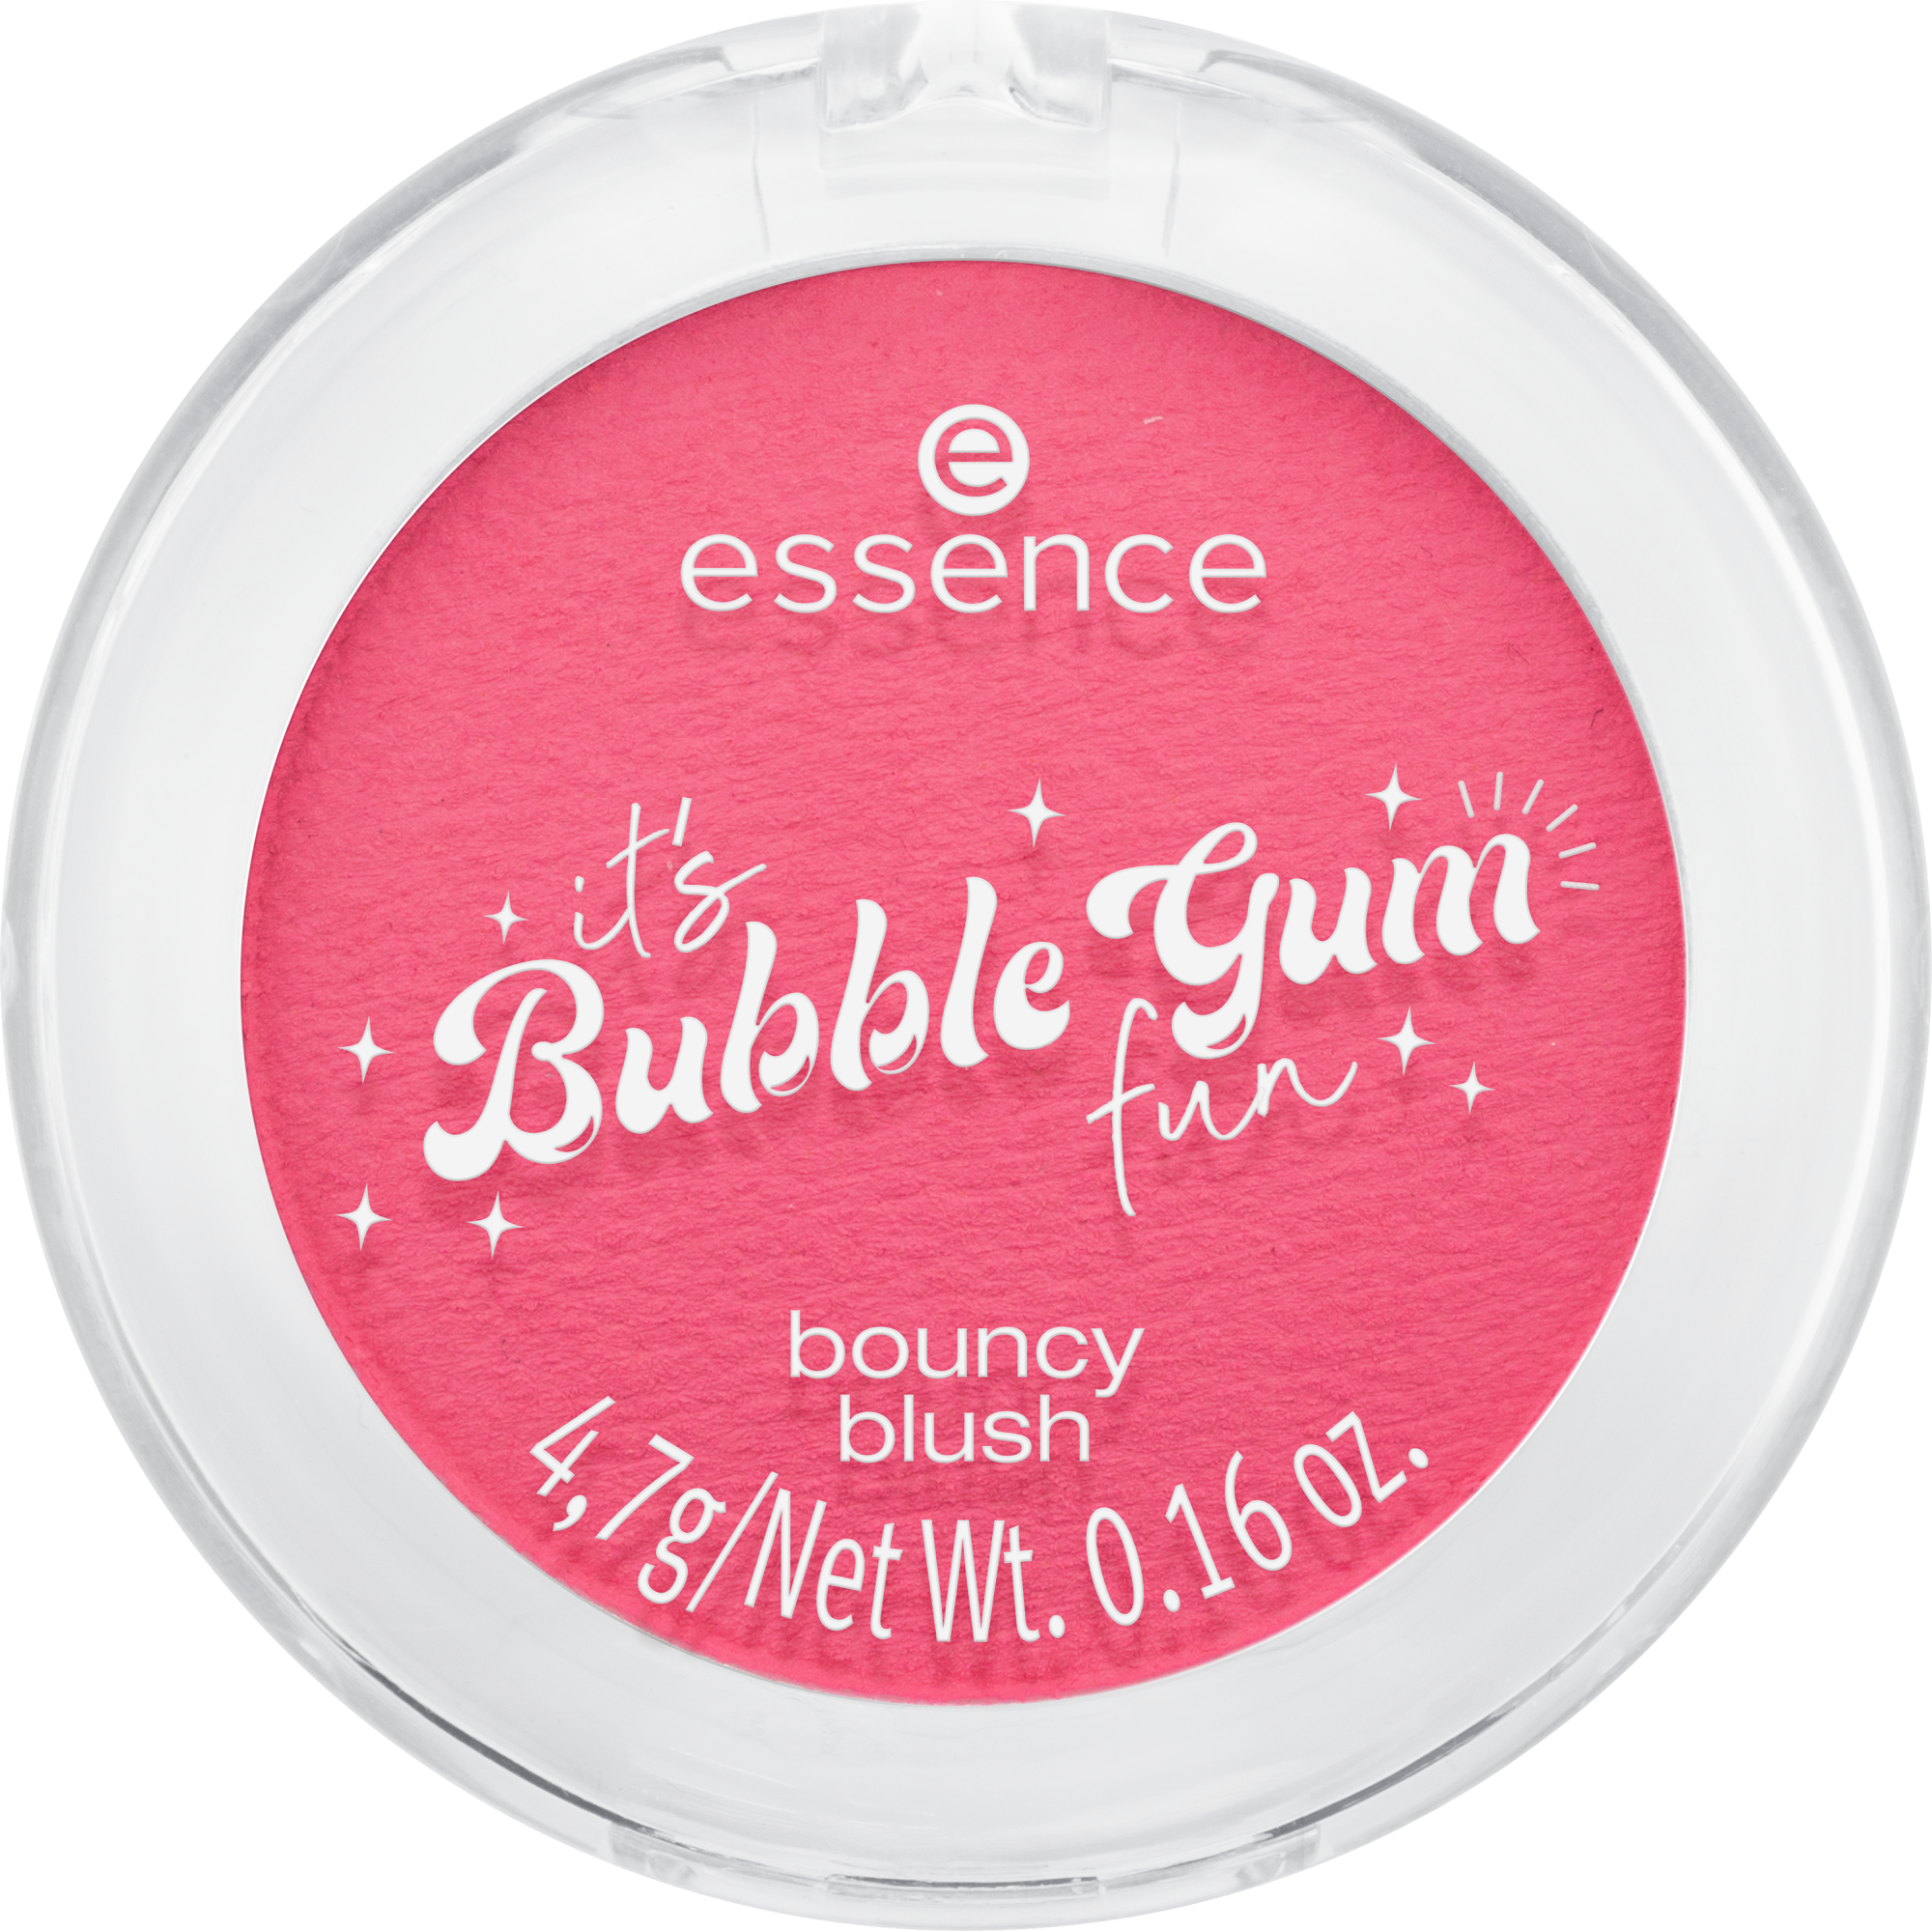 põsepuna it's Bubble Gum fun bouncy blush